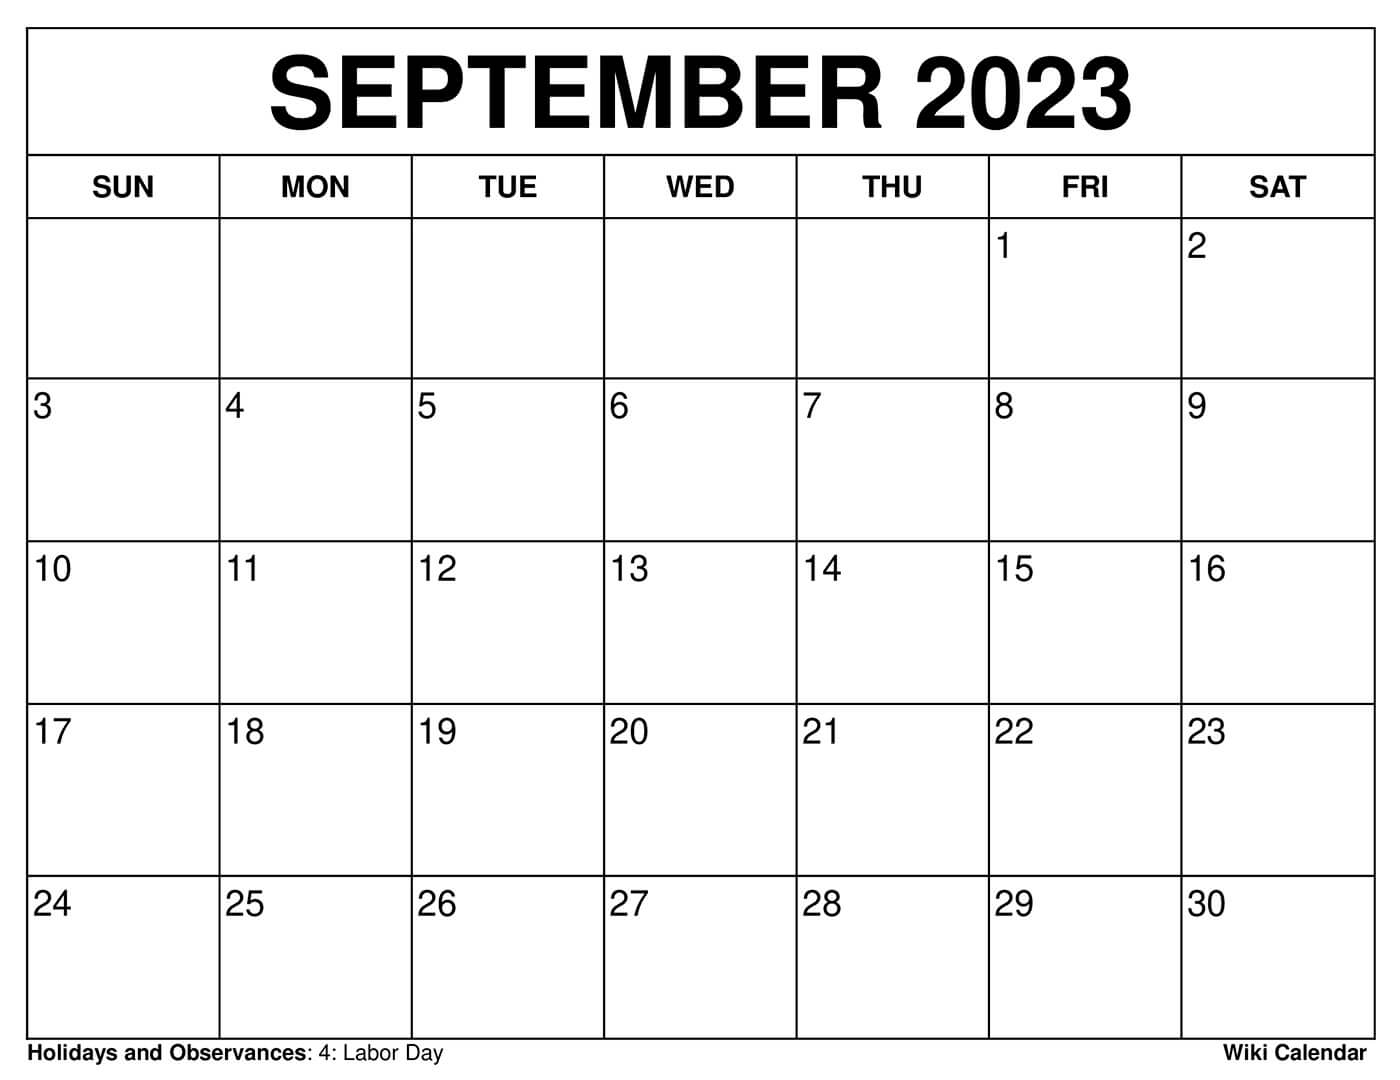 September 2022 Calendar With Holidays Free Printable September 2022 Calendars - Wiki Calendar